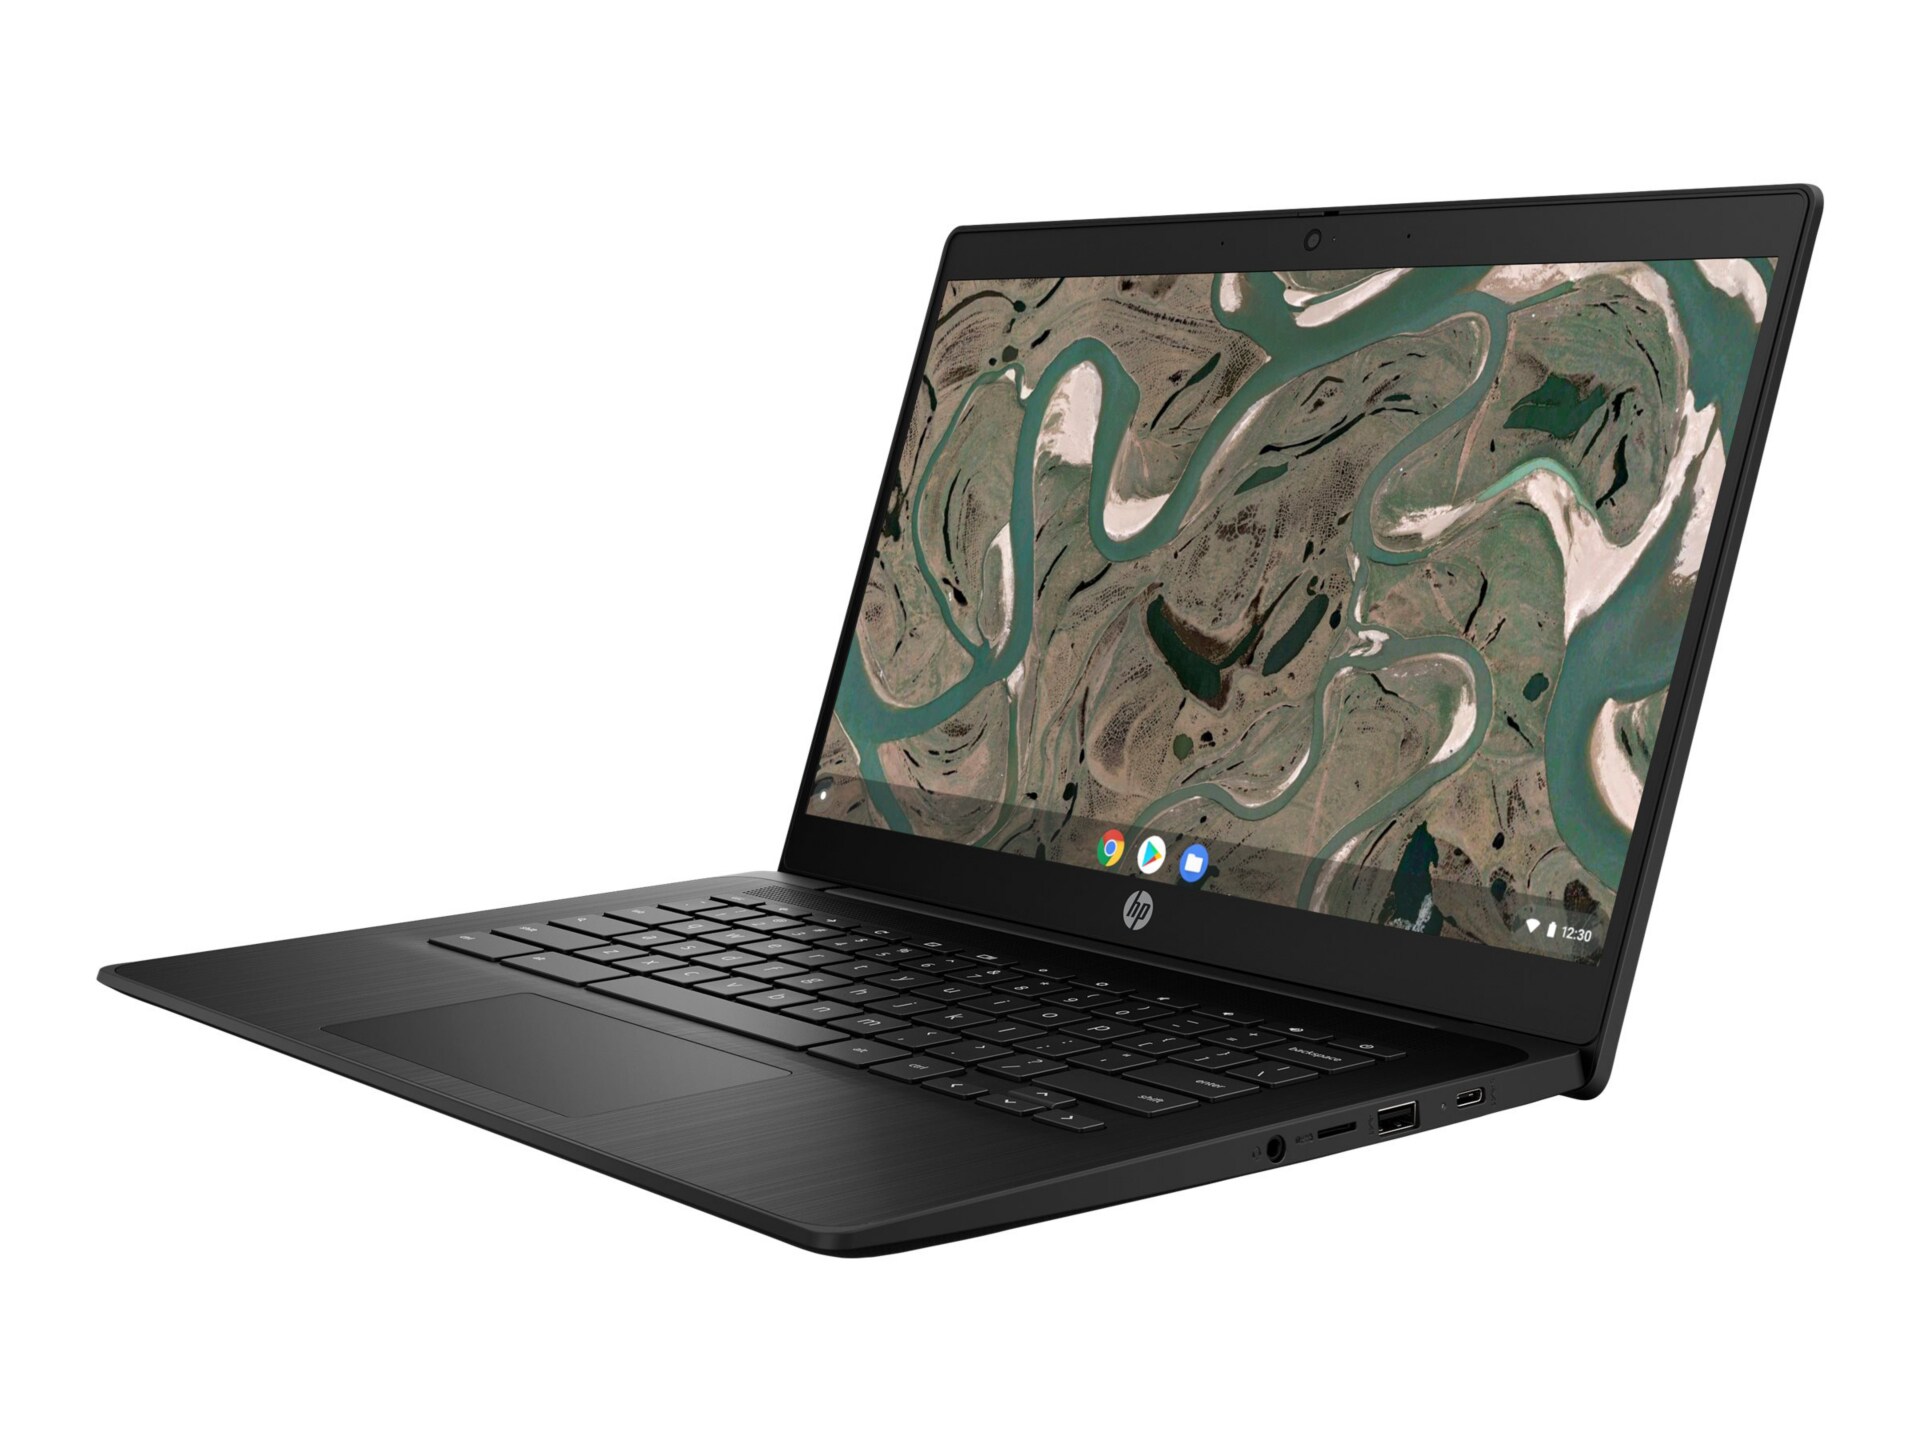 HP Chromebook 14 G7 14